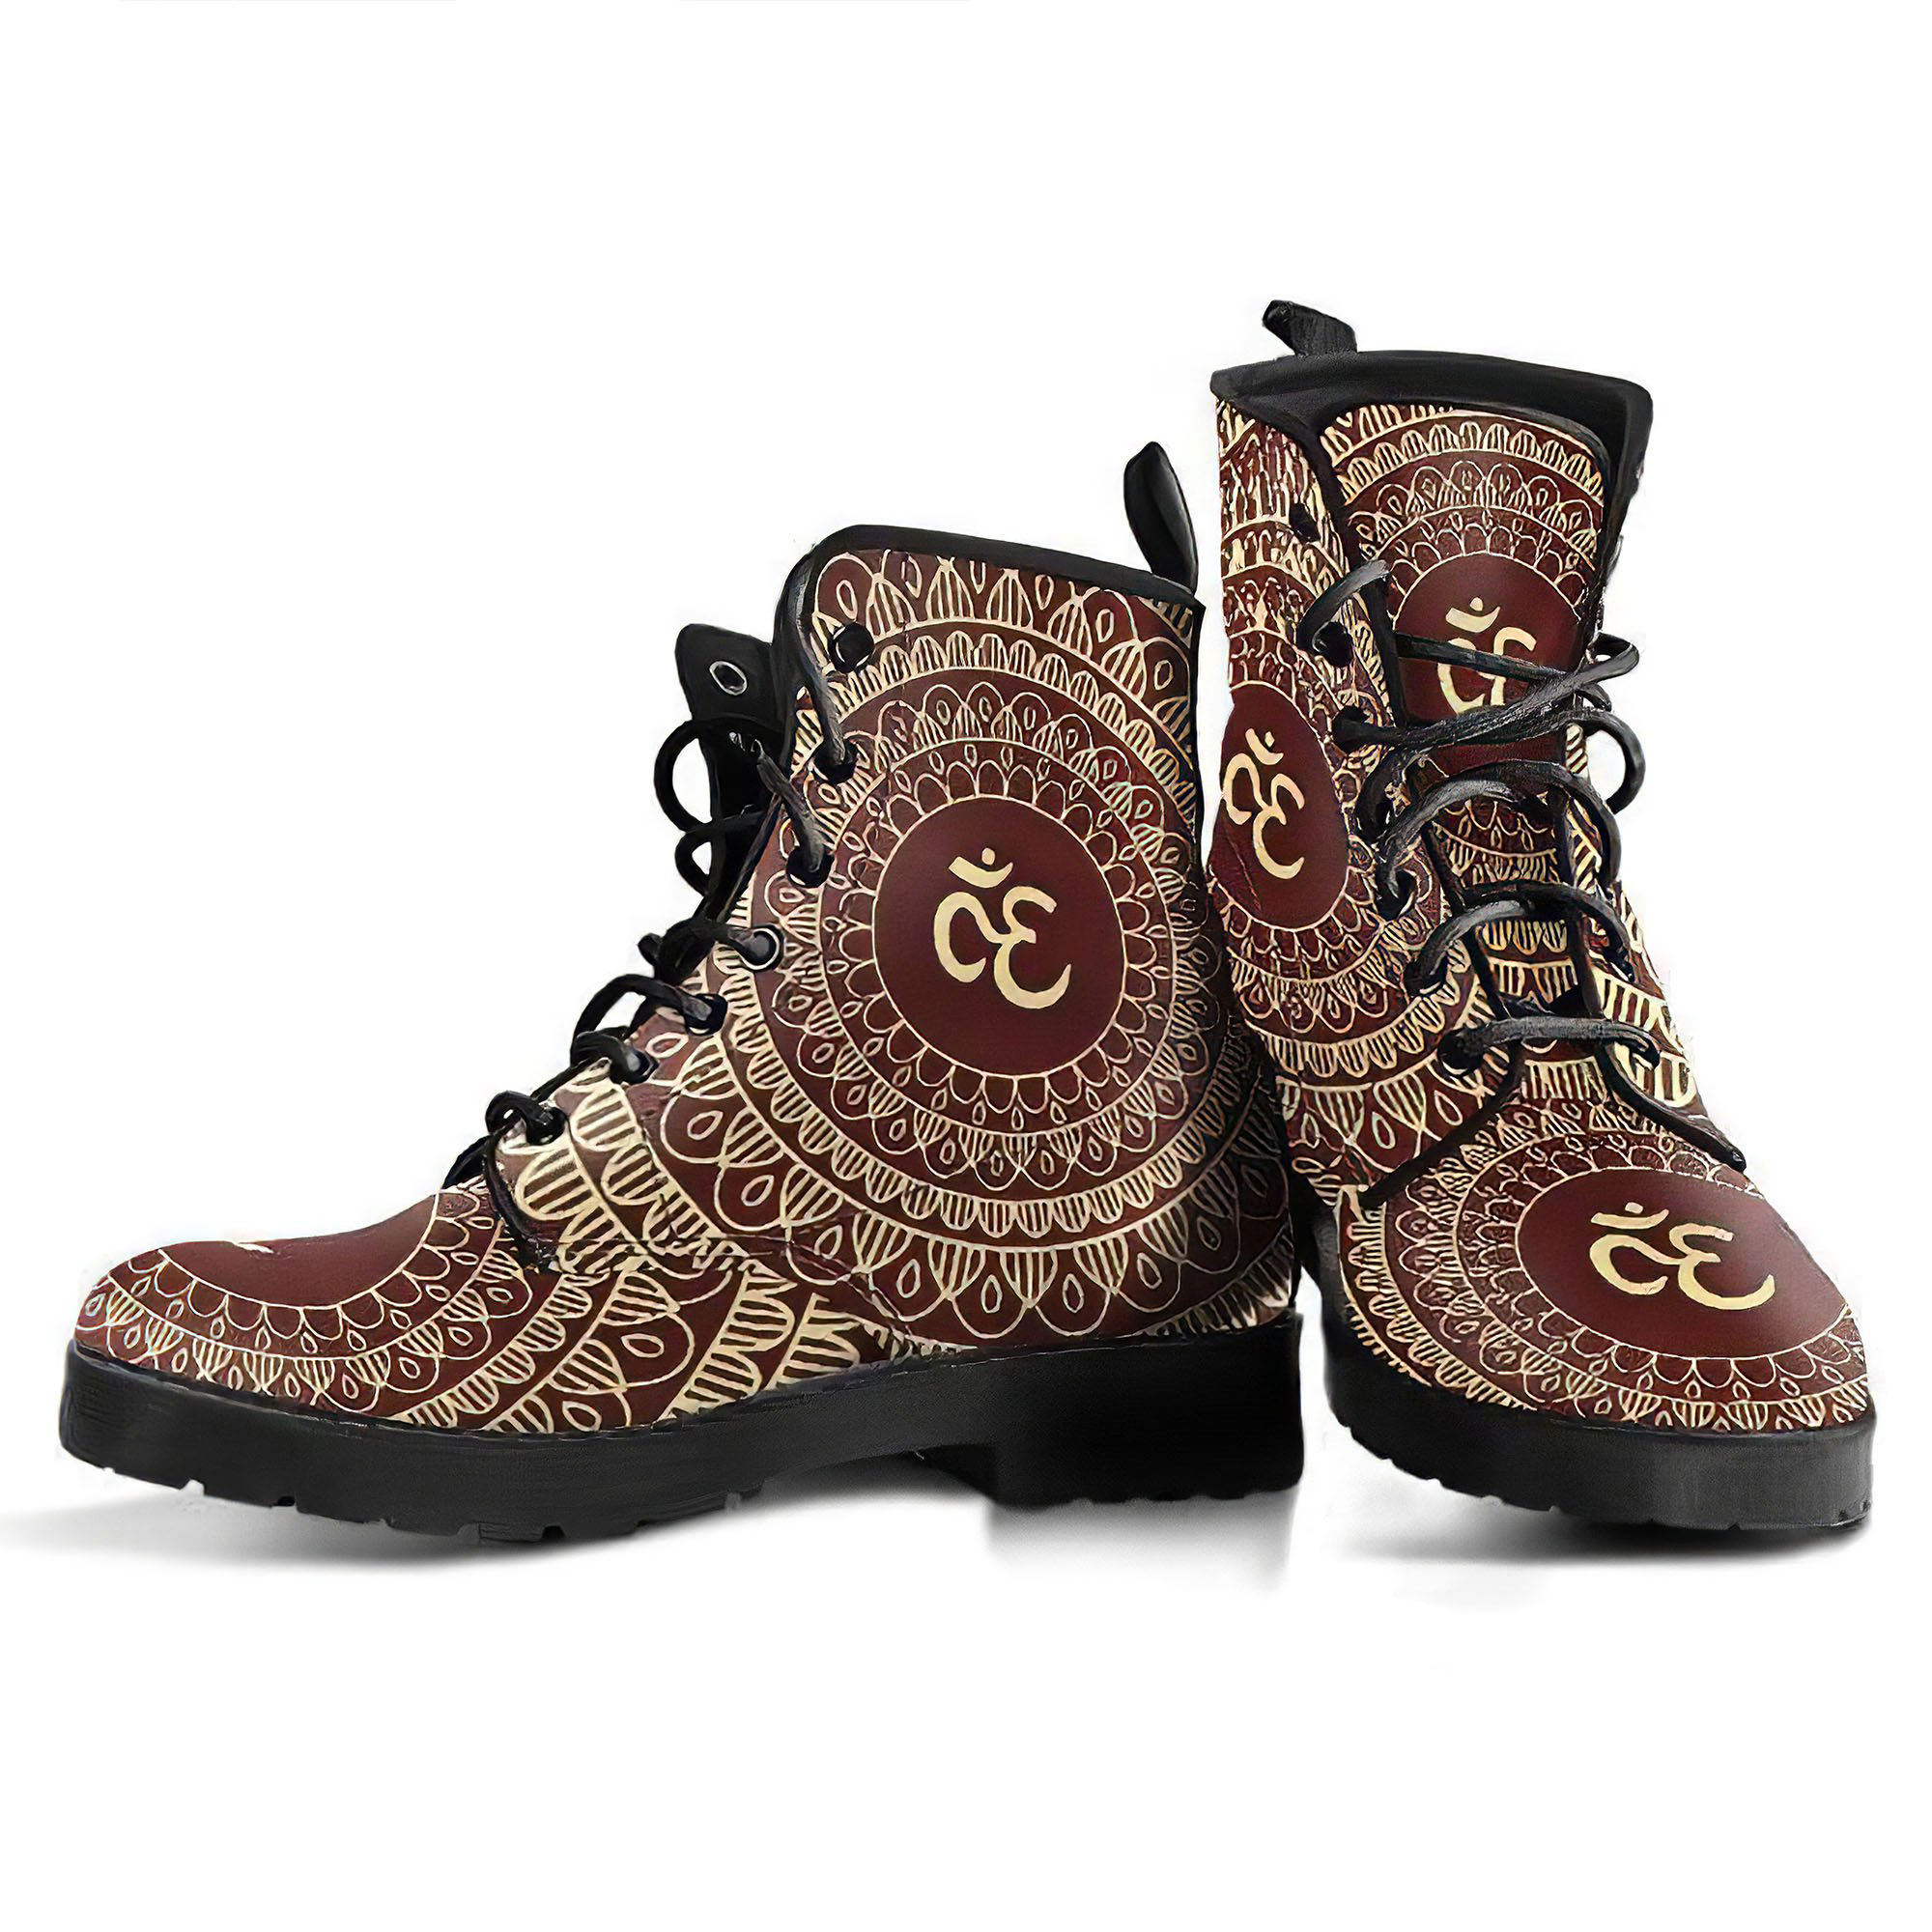 ohm-mandala-womens-leather-boots-1-gp-main.jpg